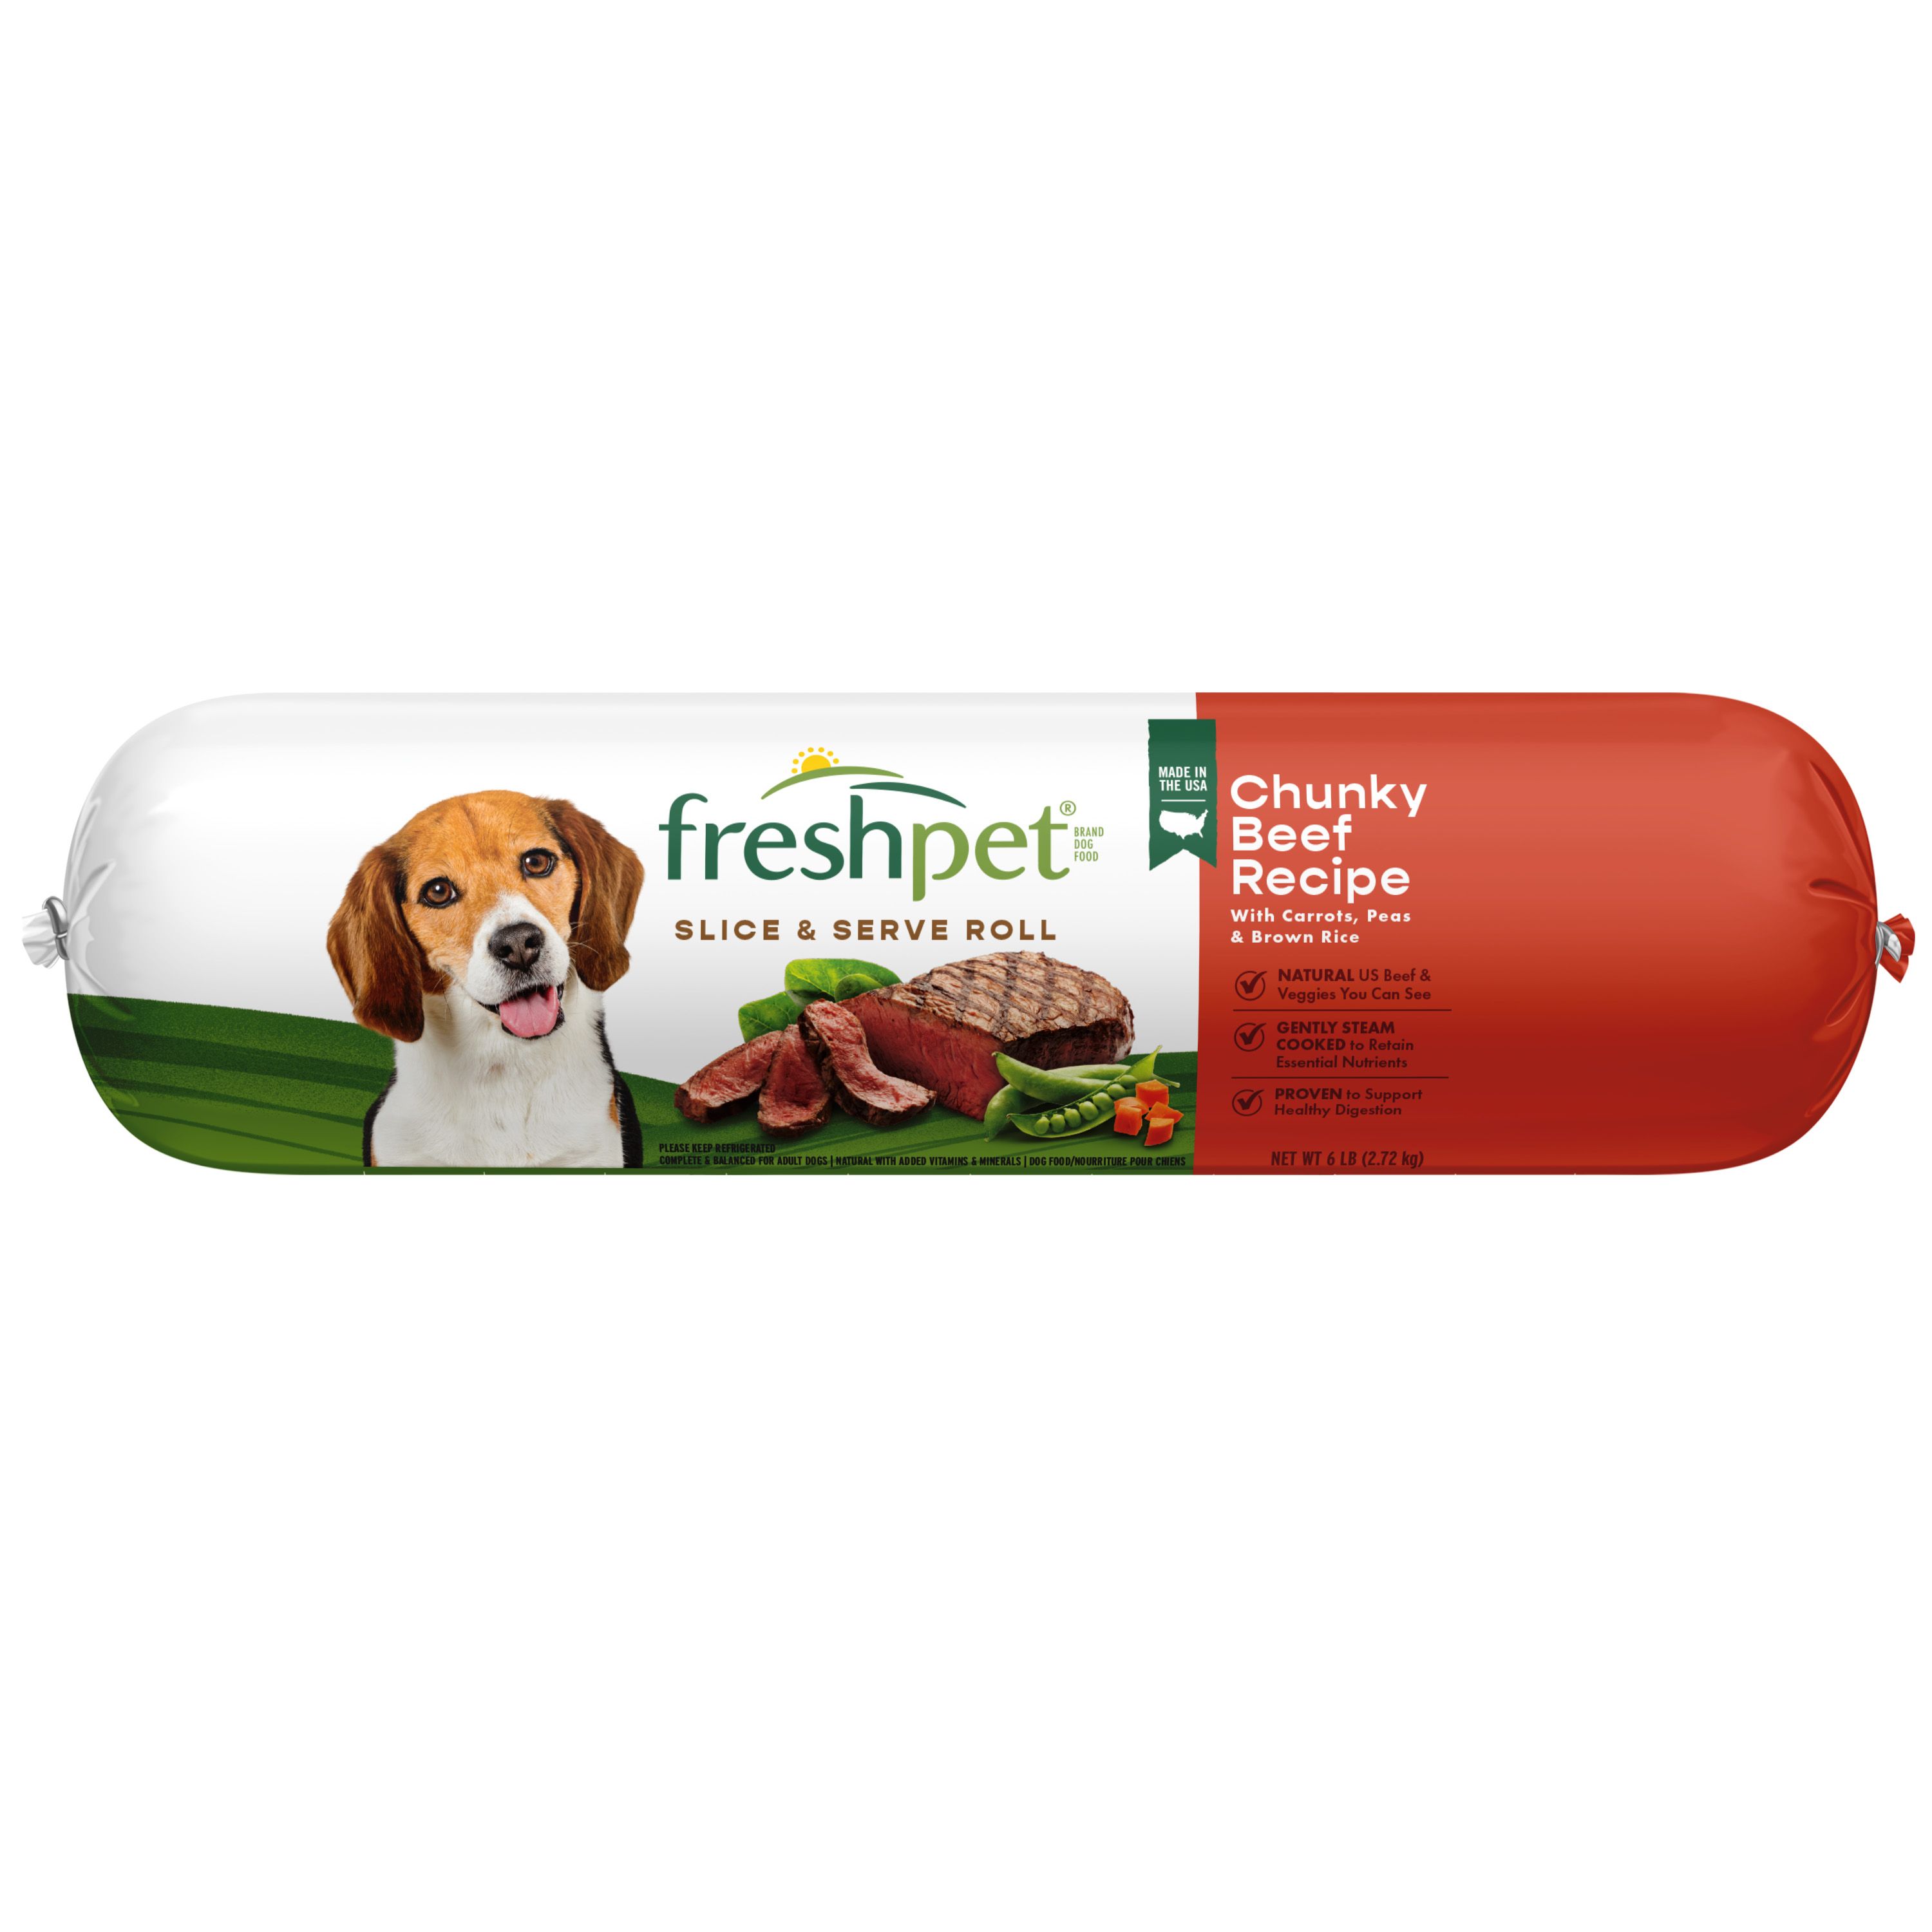 Freshpet Healthy & Natural Dog Food, Fresh Beef Roll, 6lb - image 1 of 6